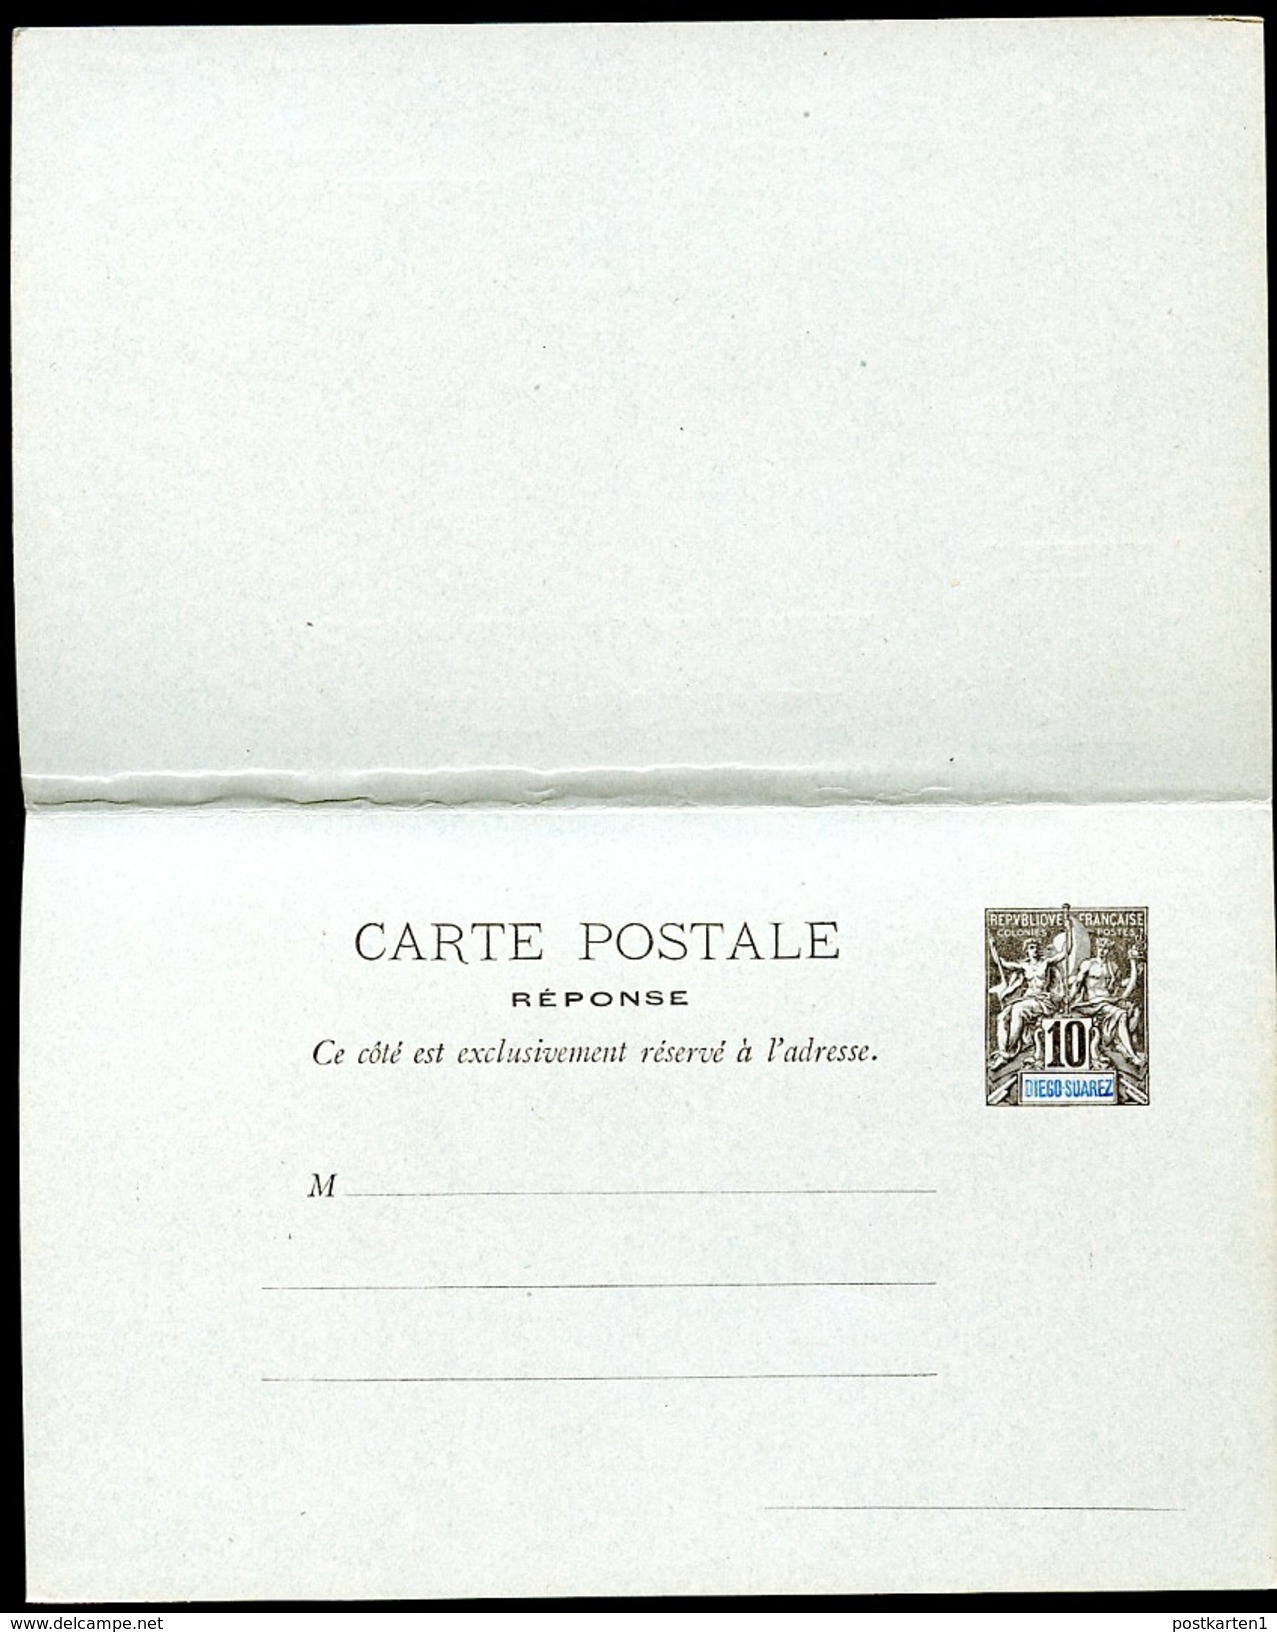 DIEGO SUAREZ MADAGASCAR Postal Cards #6-7  Mint 1893 - Covers & Documents